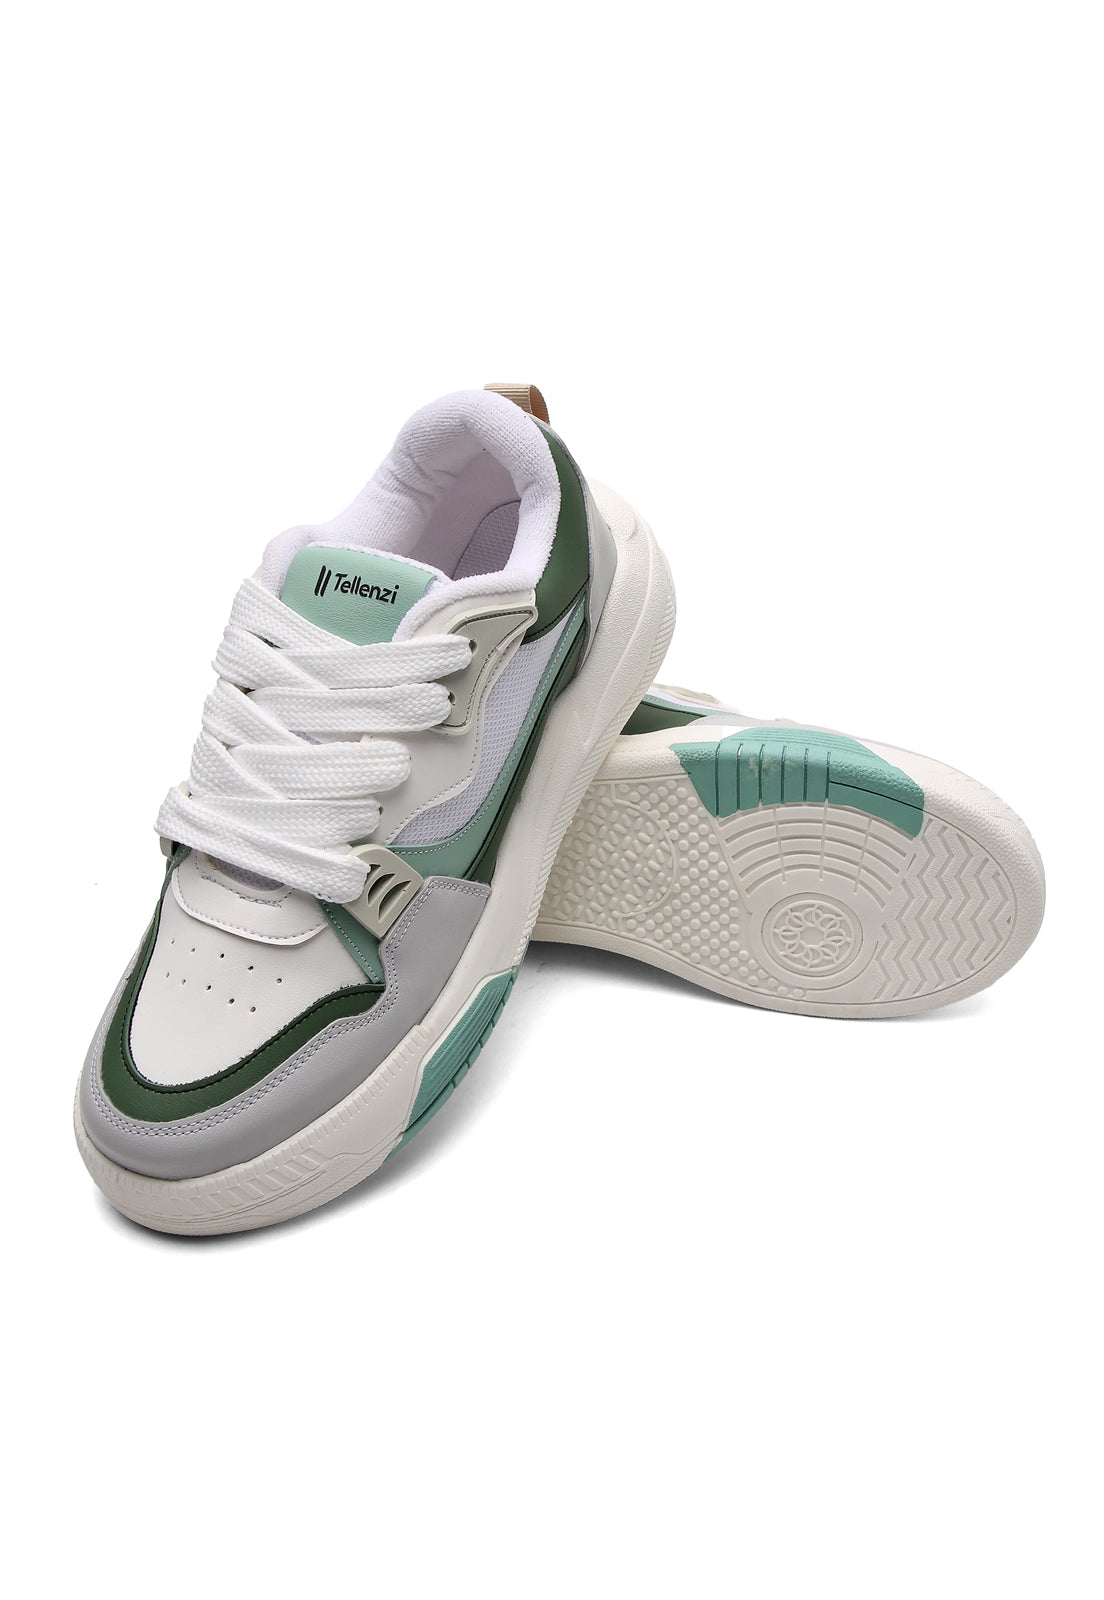 Tenis Sneakers Dama Marfil-Verde Tellenzi 150